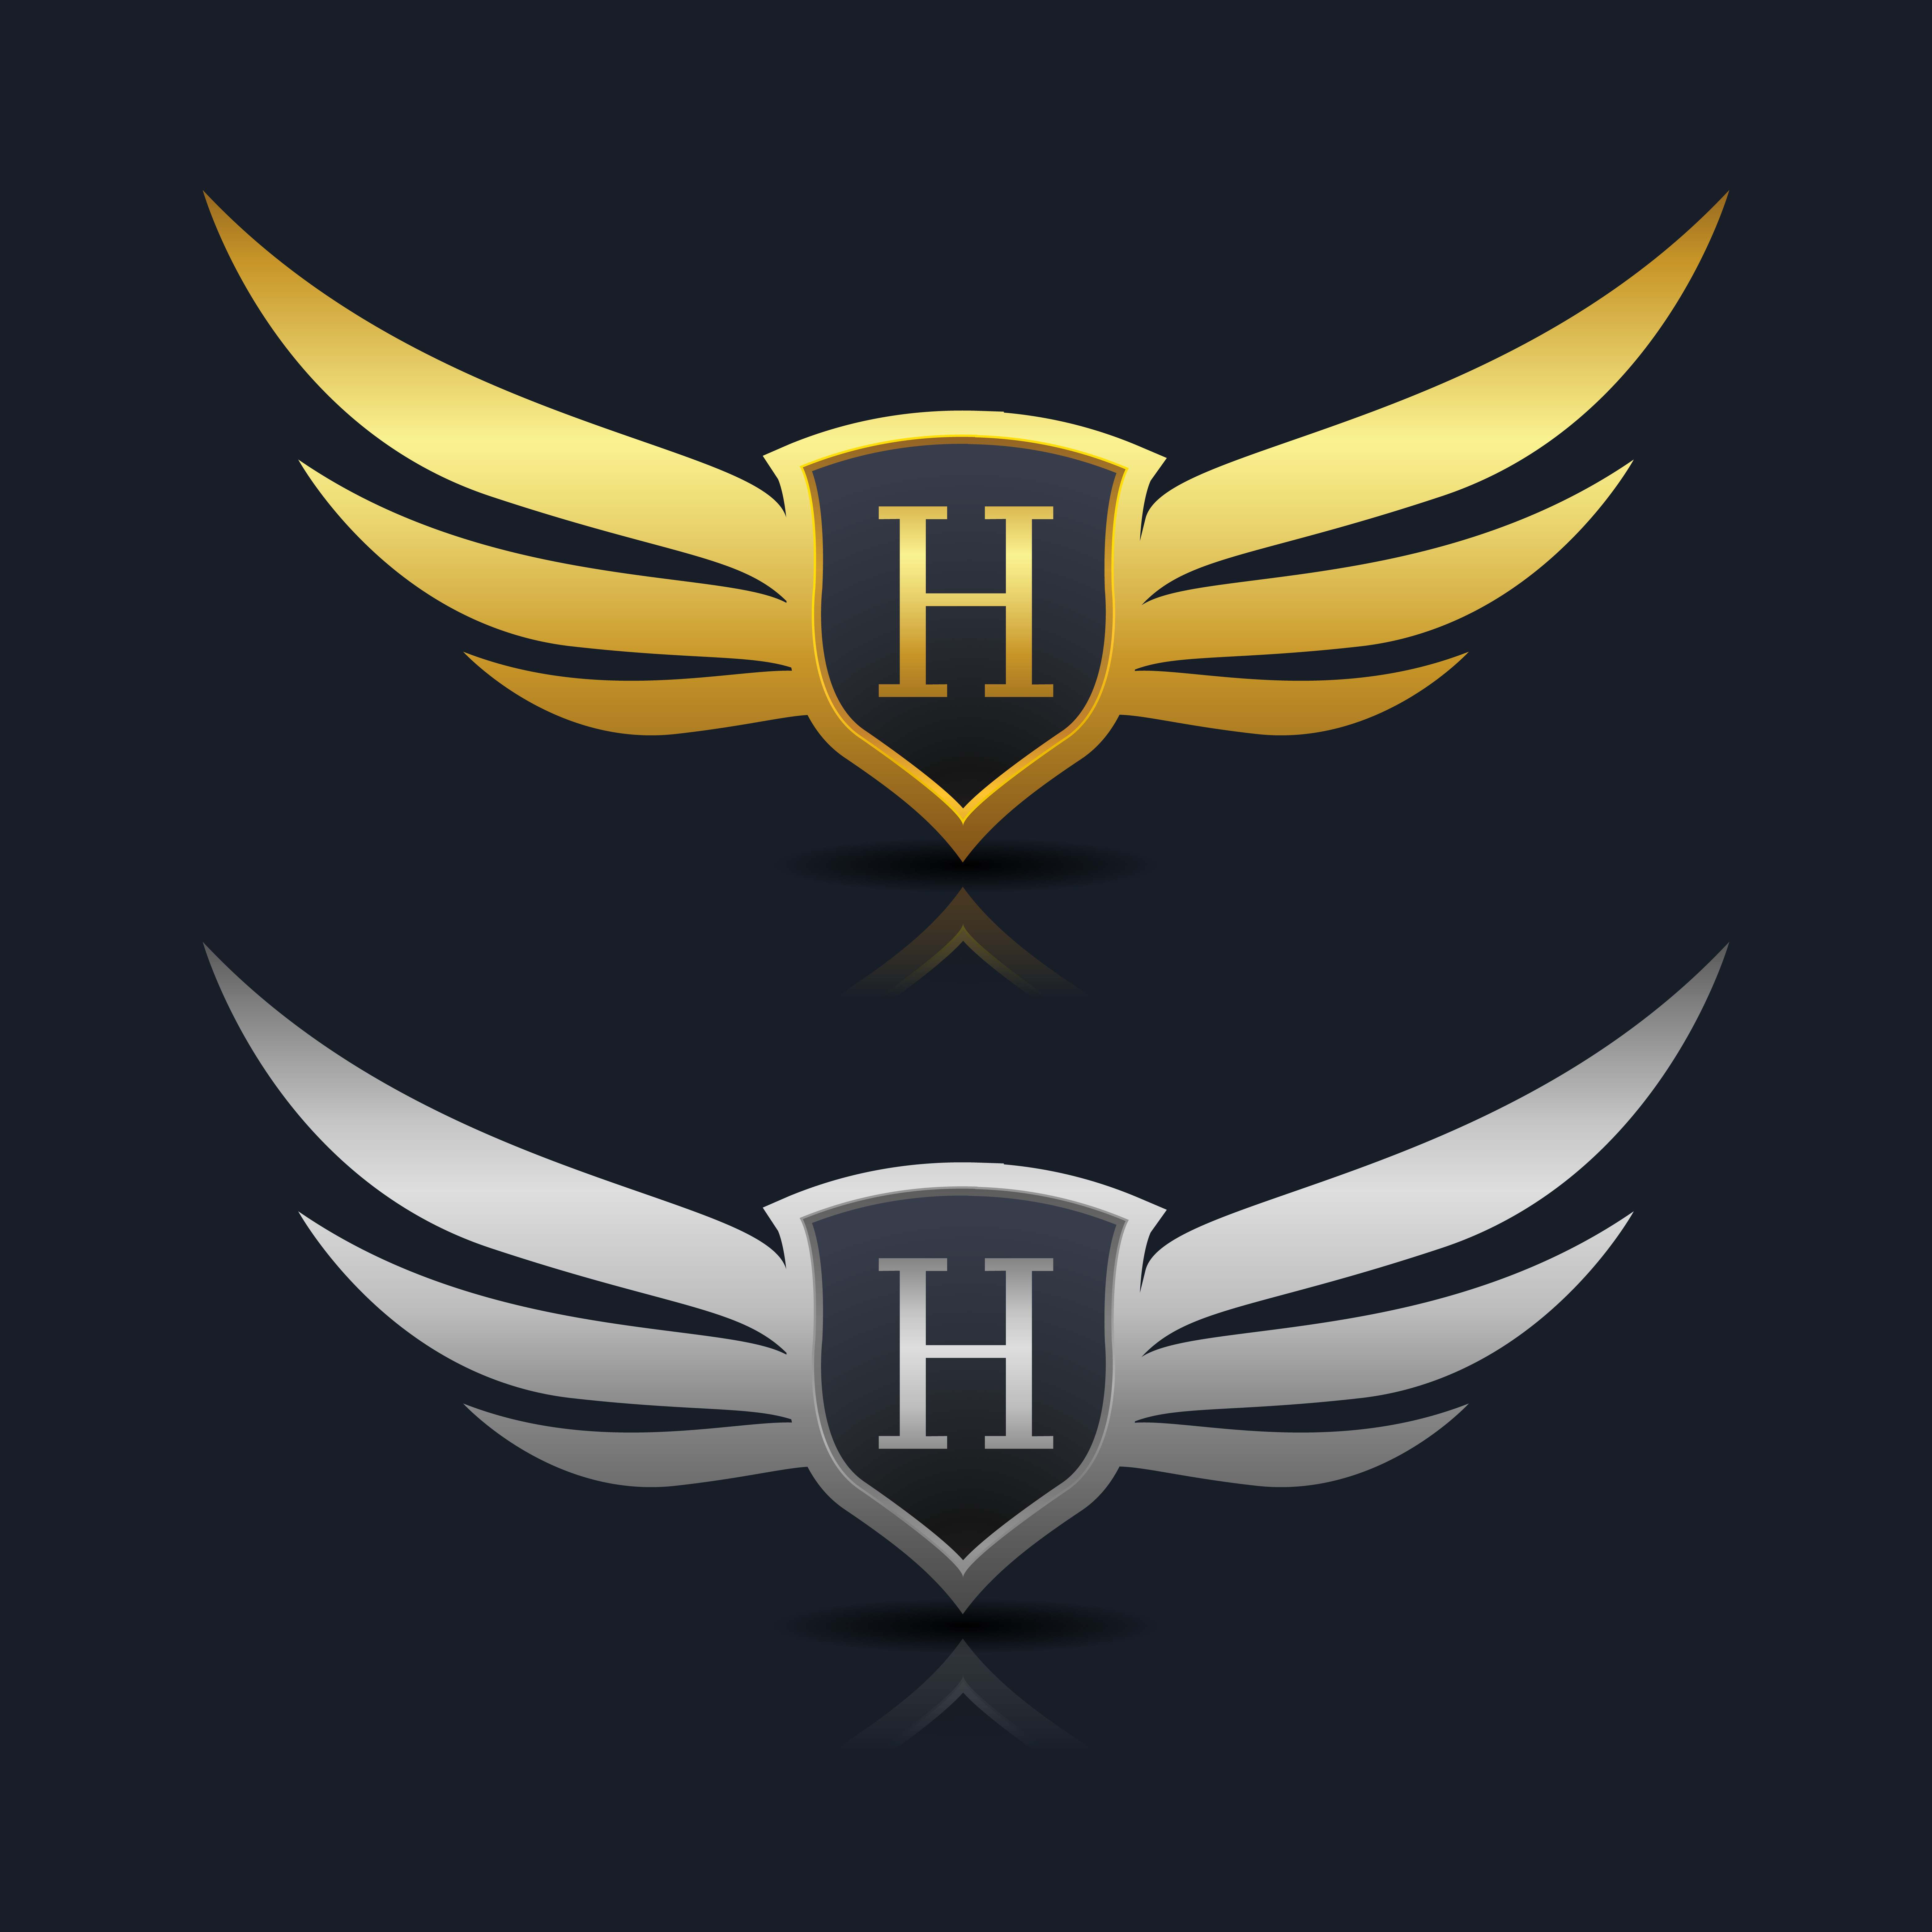 Download Letter H emblem Logo - Download Free Vectors, Clipart ...